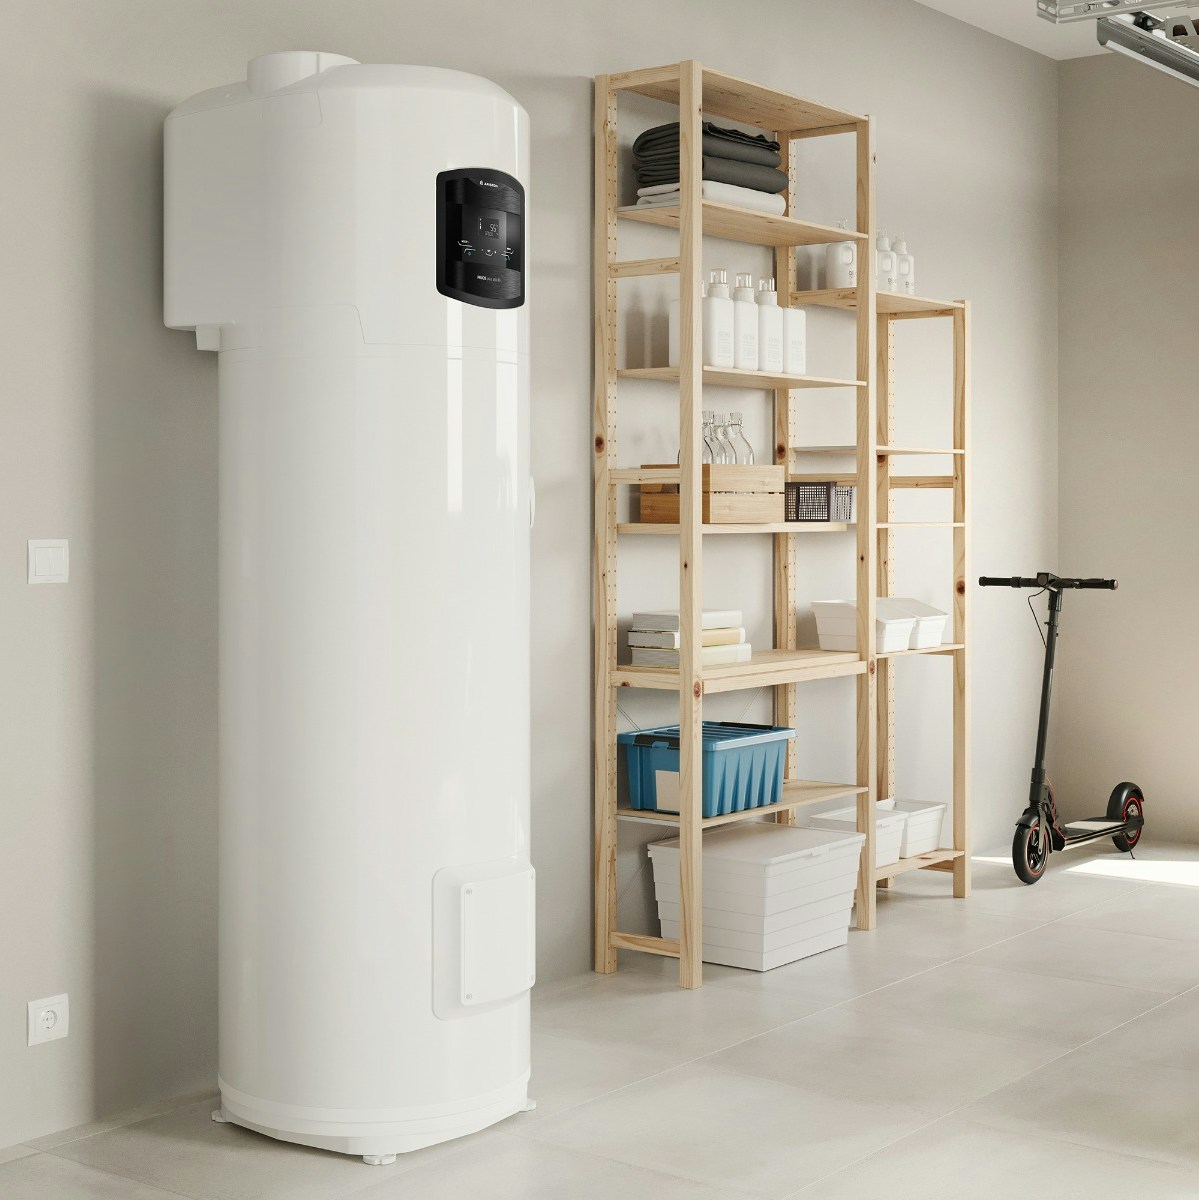 Ariston NUOS Plus Wi-Fi air source heat pump water heater - In-situ image